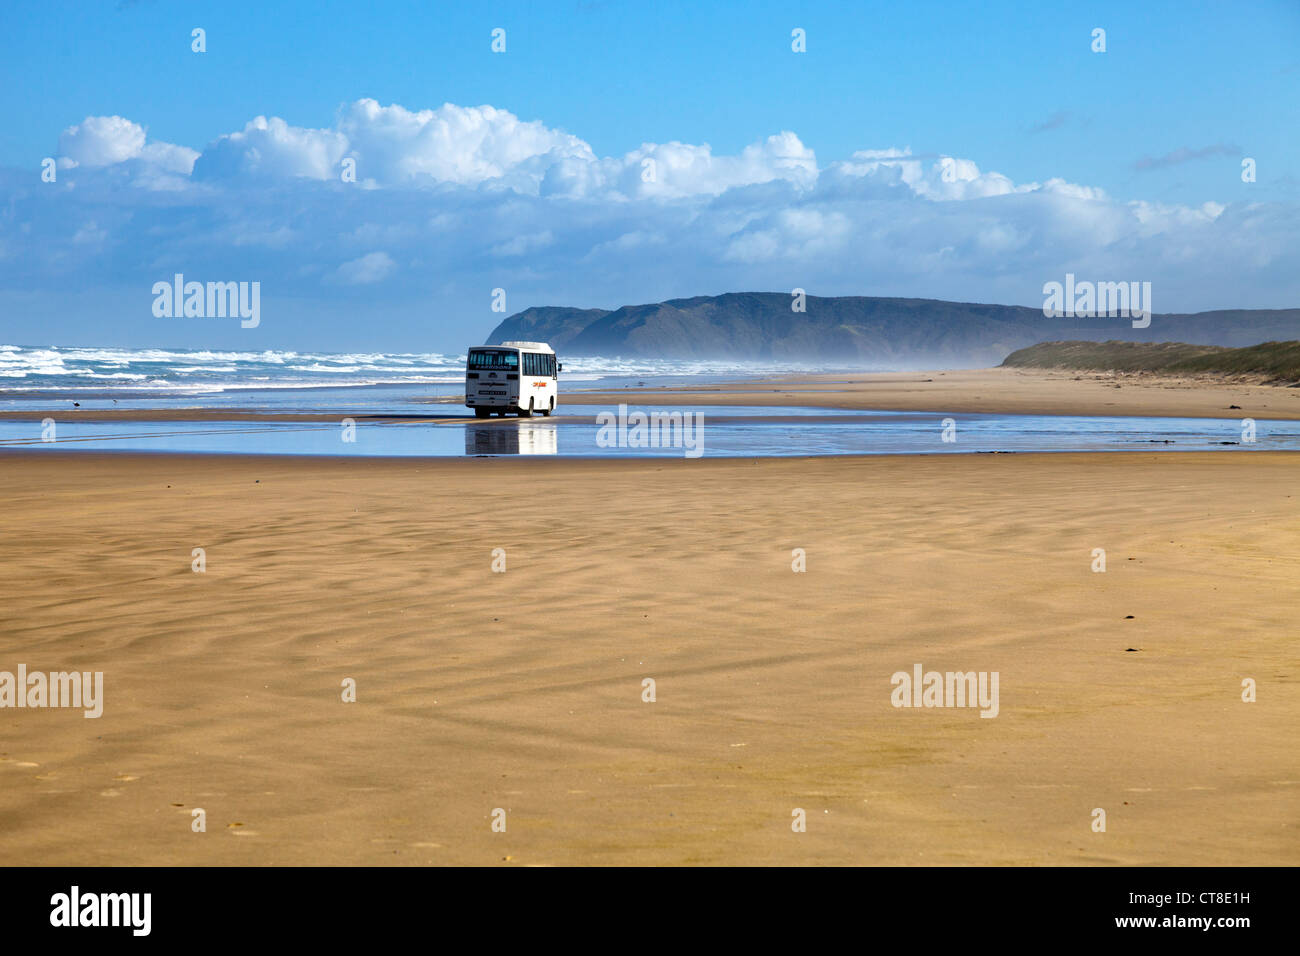 Ninety Mile Beach, Nuova Zelanda - autobus turistico racing contro la marea Foto Stock